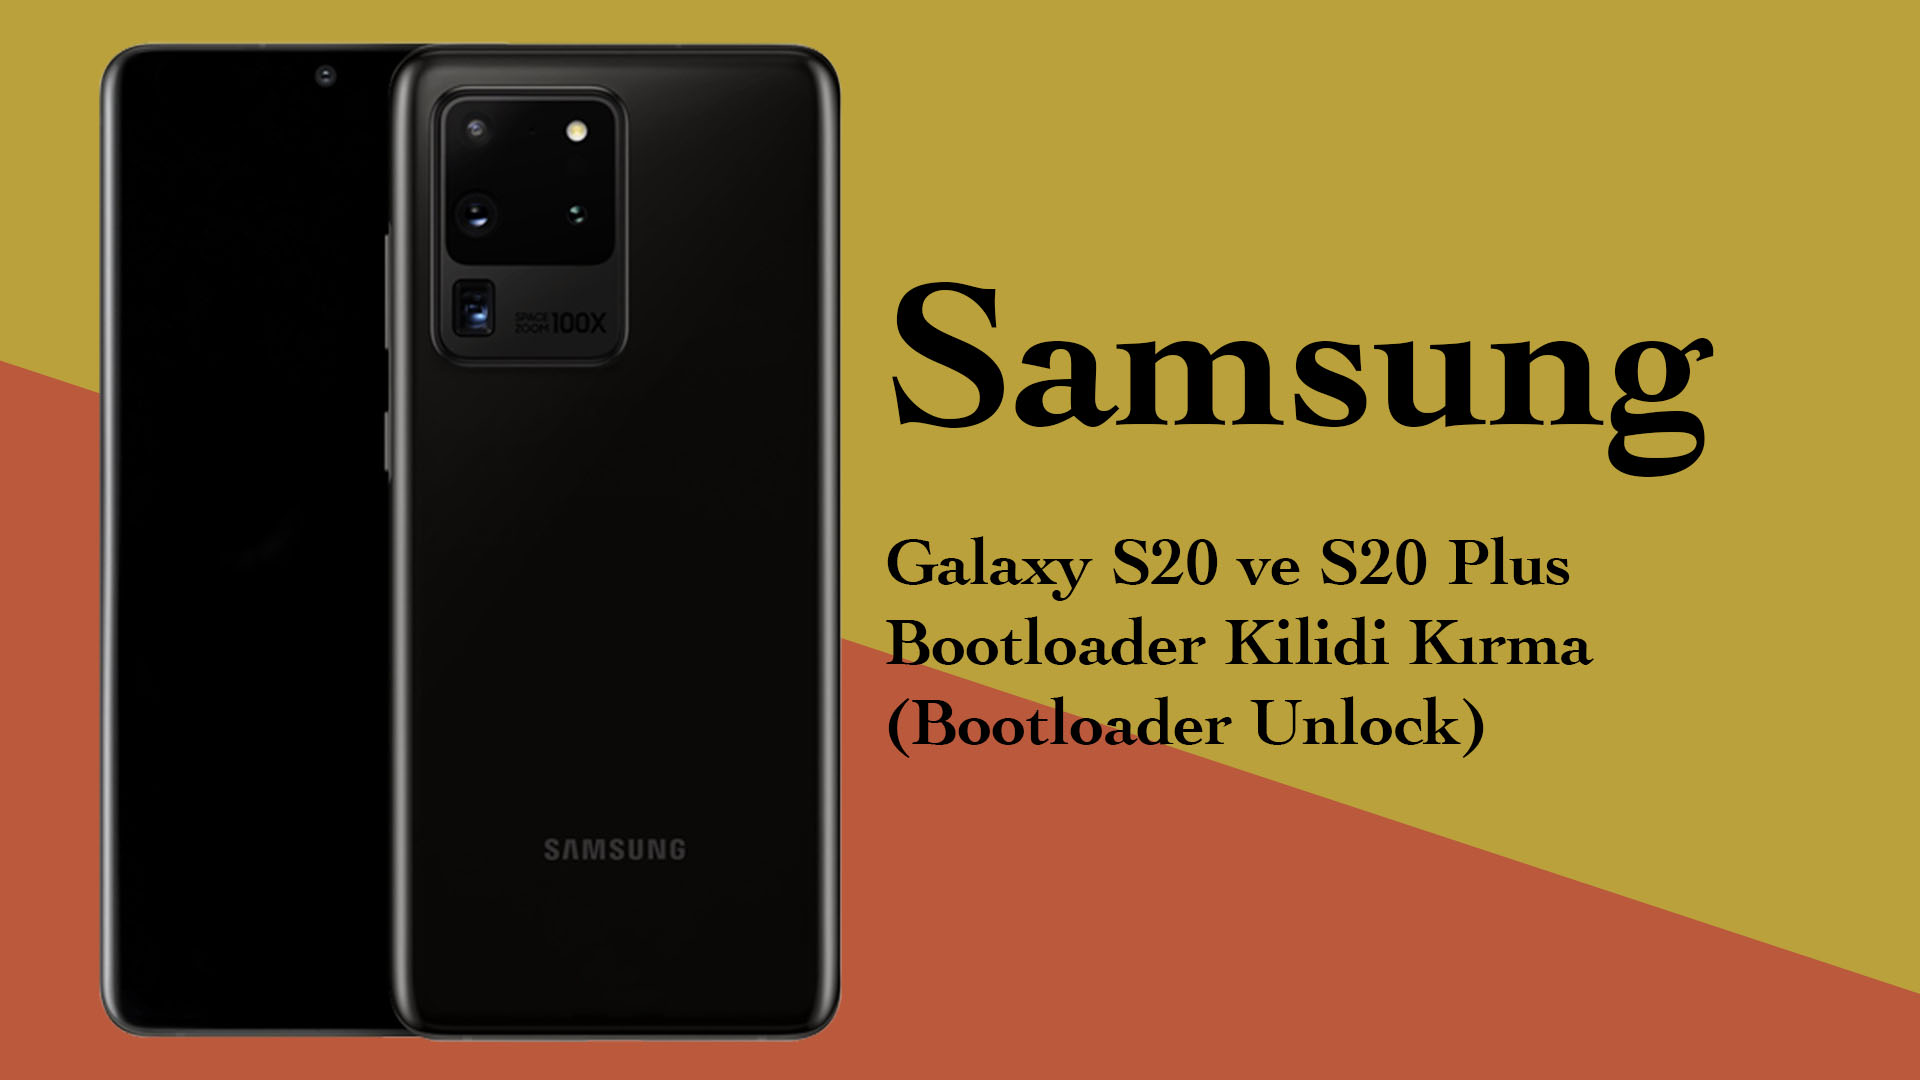 Samsung Galaxy S20 ve S20 Plus Bootloader Kilidi Kırma (Unlock) samsung galaxy s20 plus galaxy s20 bootloader unlock bootloader kilidi kırma 